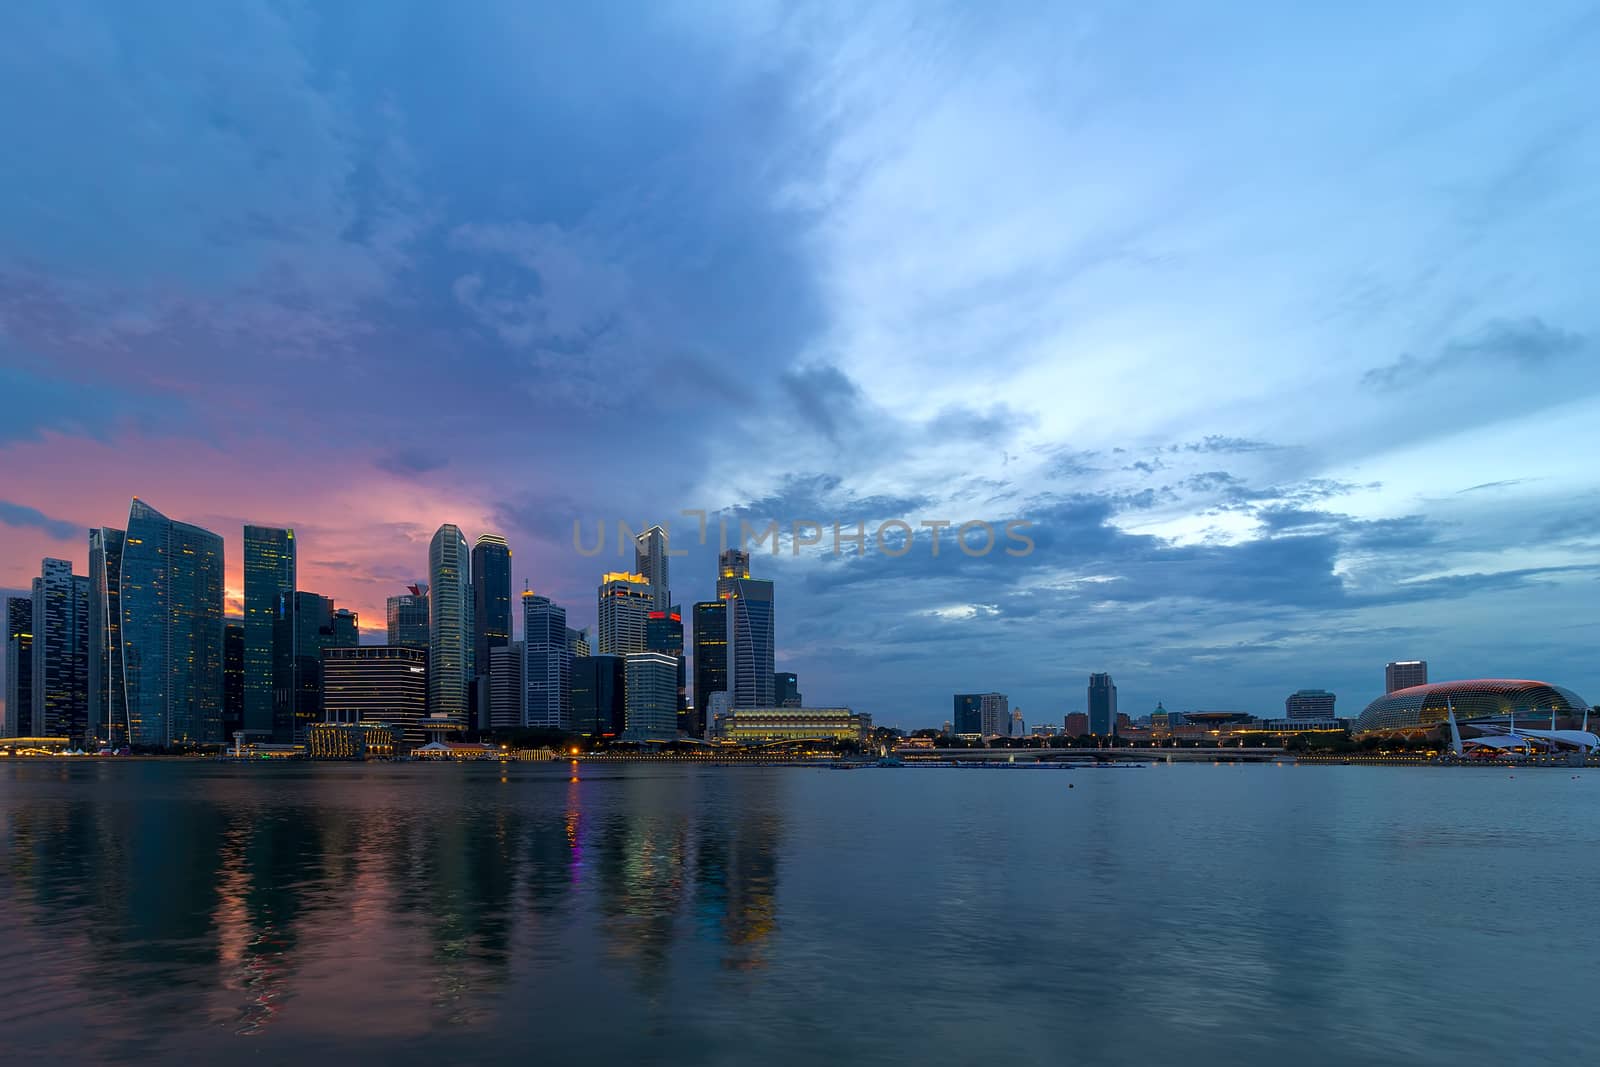 Sunset  over Singapore Modern Skyline by jpldesigns